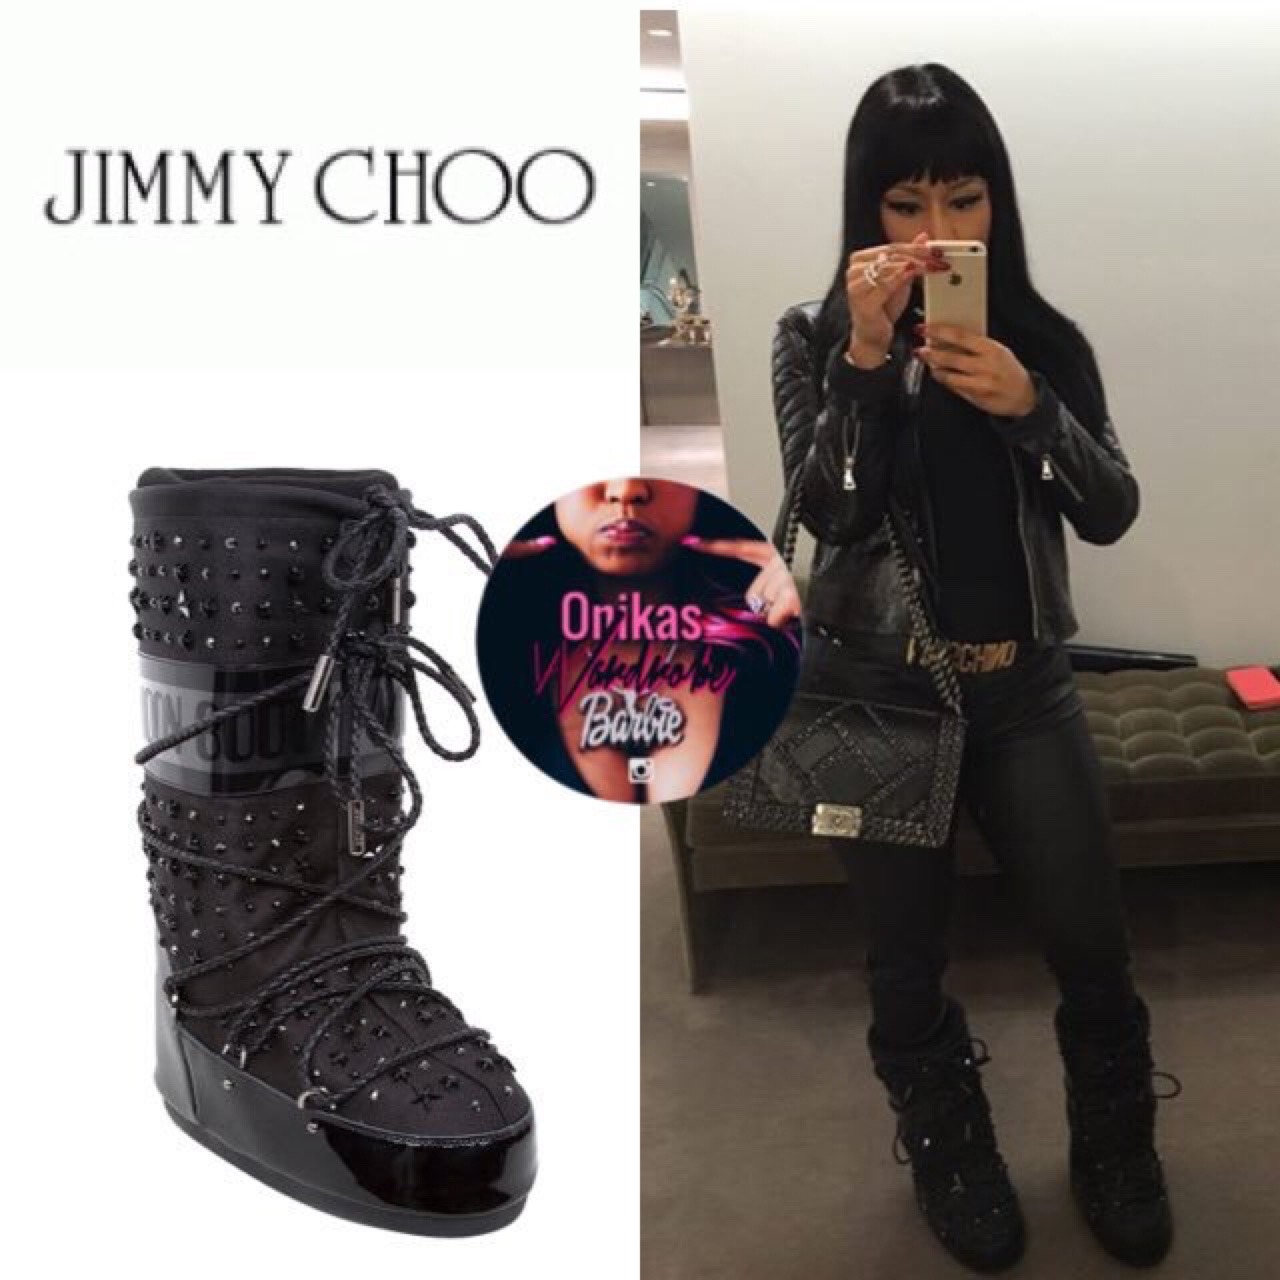 her $959 Jimmy Choo moon boots 